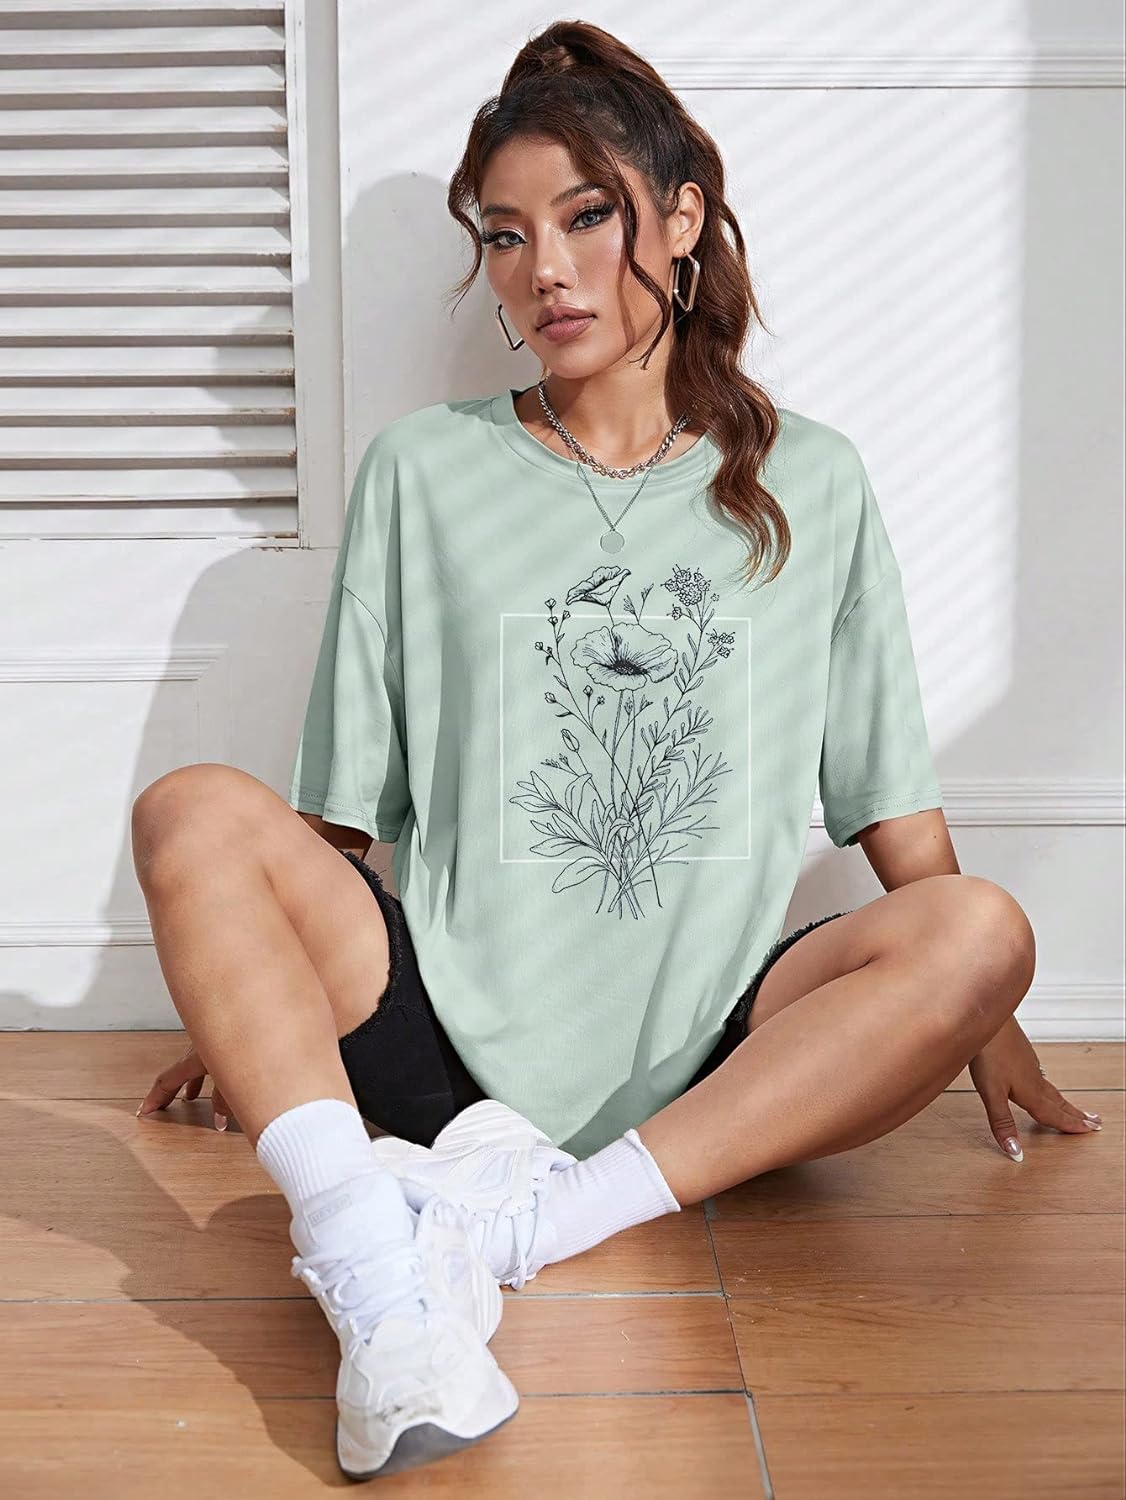 SHENHE Women's Graphic Tee Oversized Letter Drop Shoulder T Shirts Top on Amazon Deals